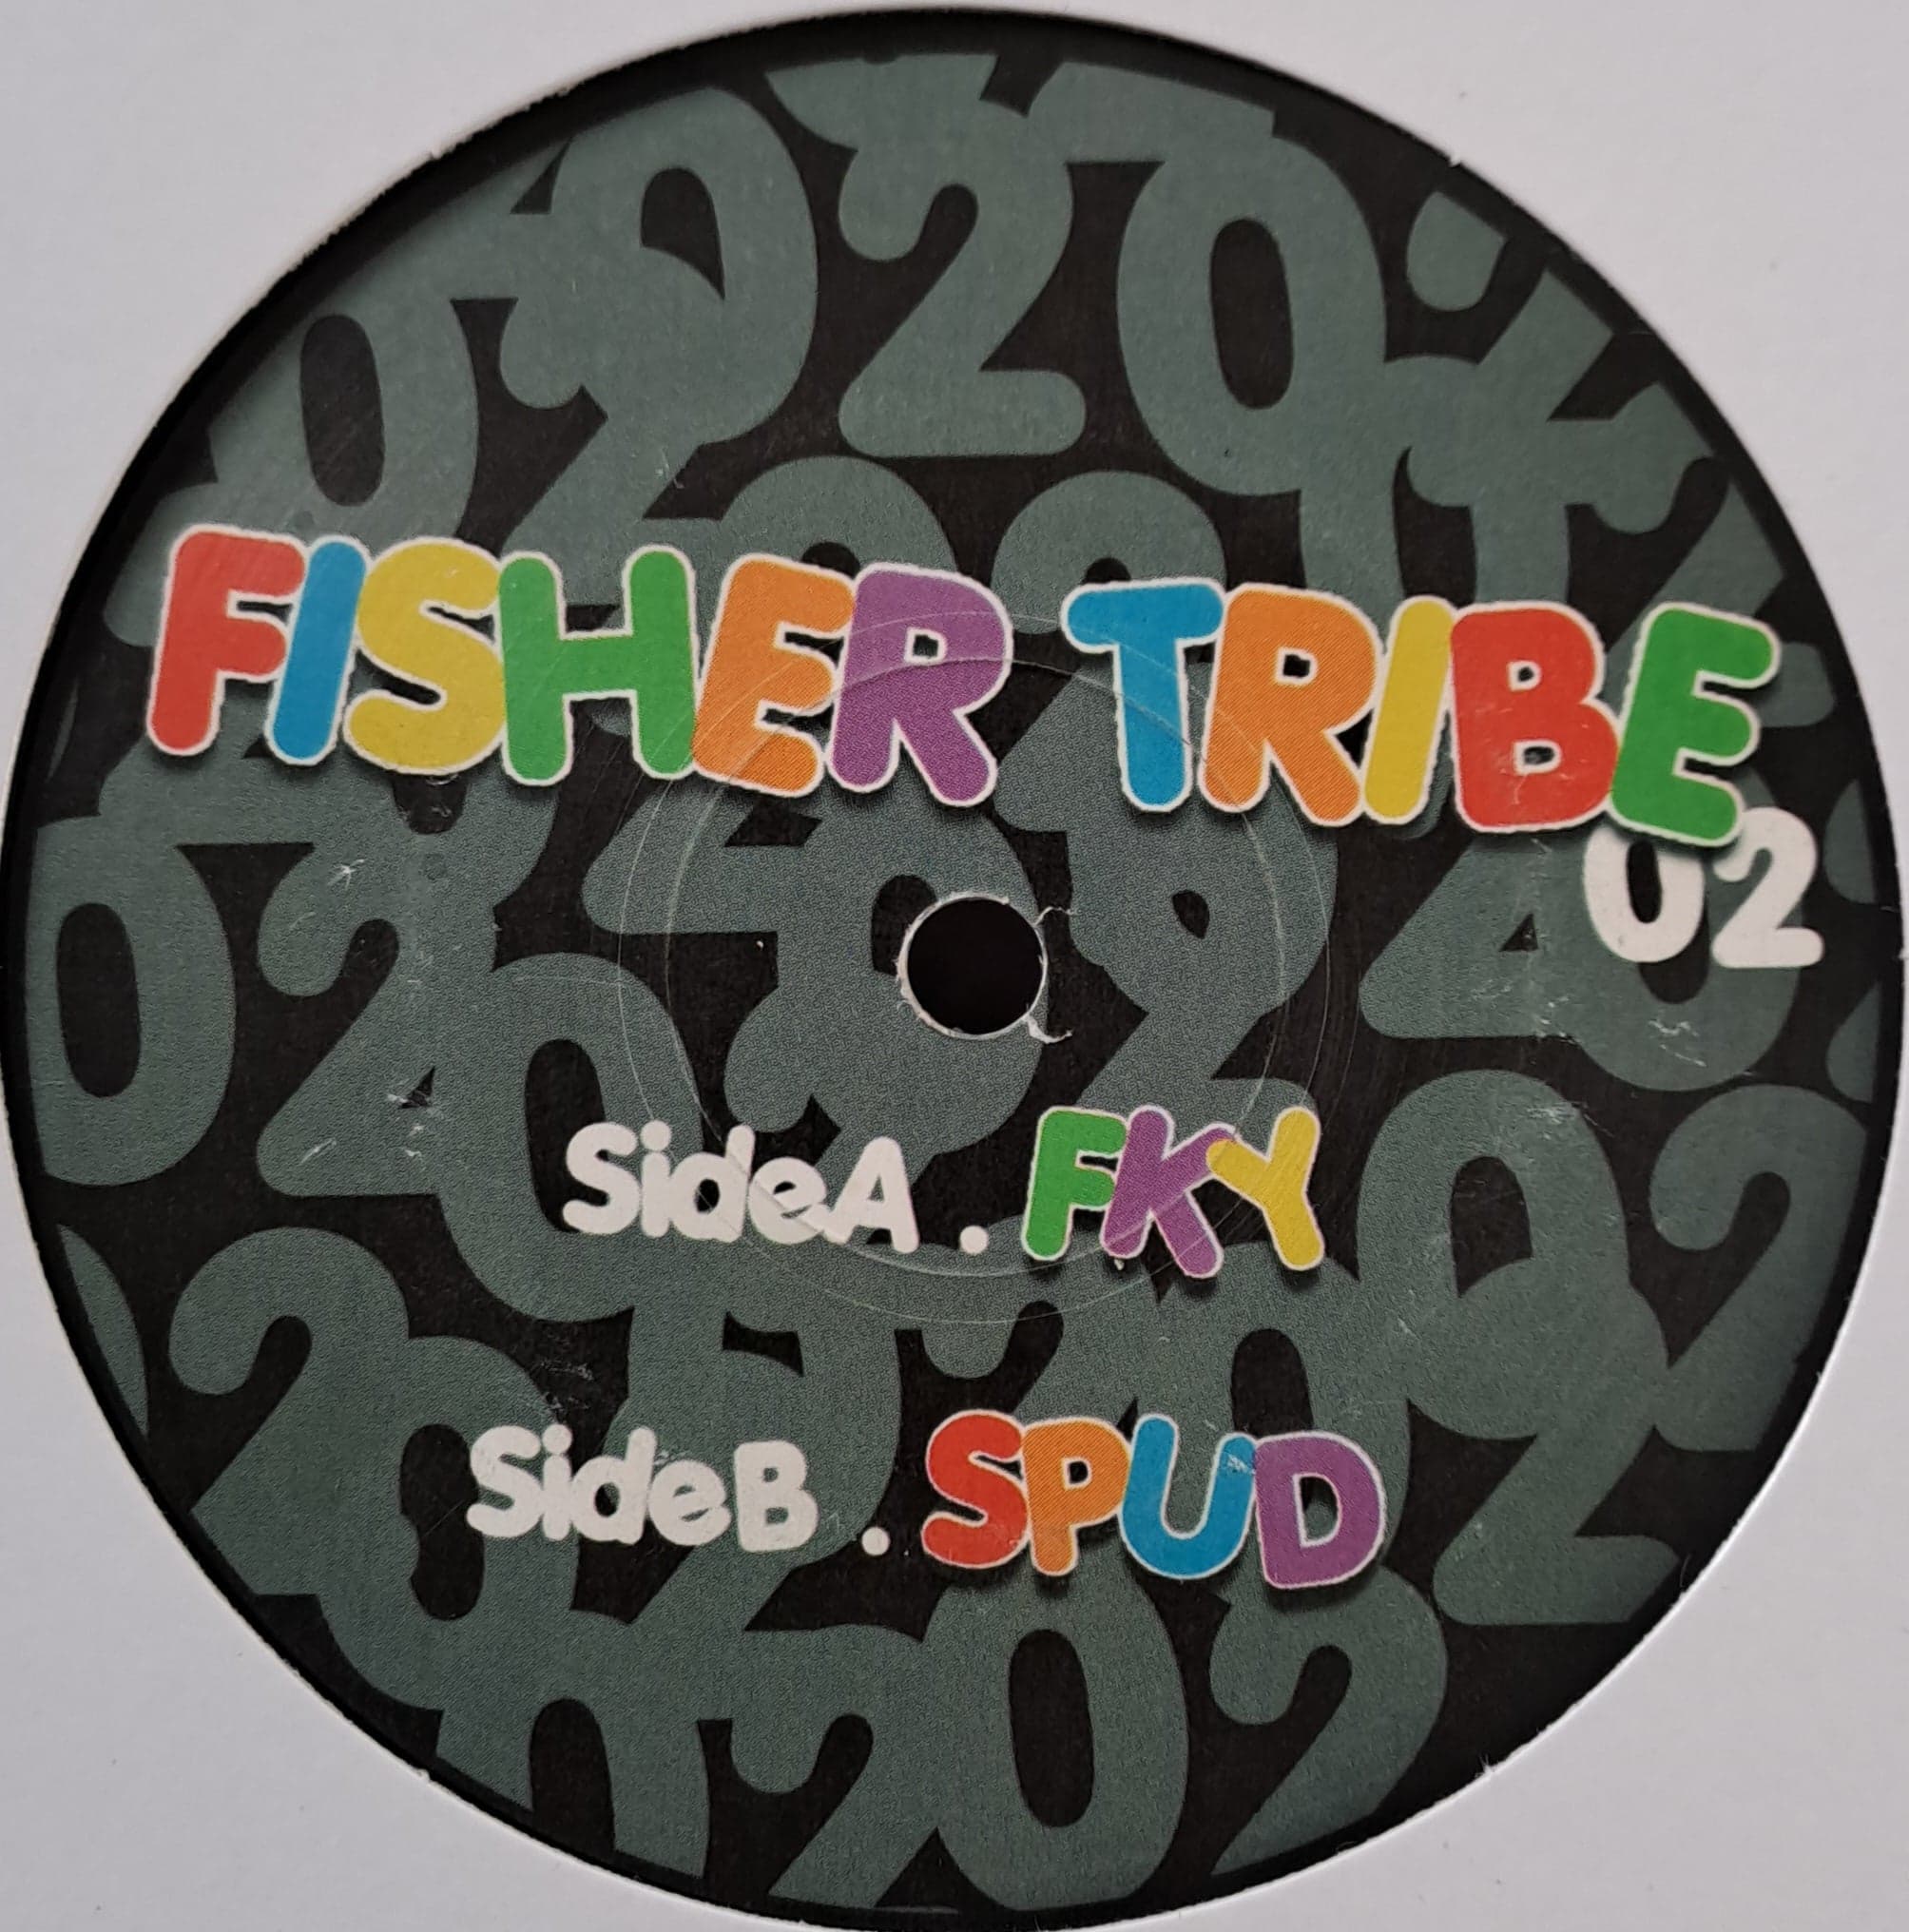 Fisher Tribe 02 - vinyle freetekno